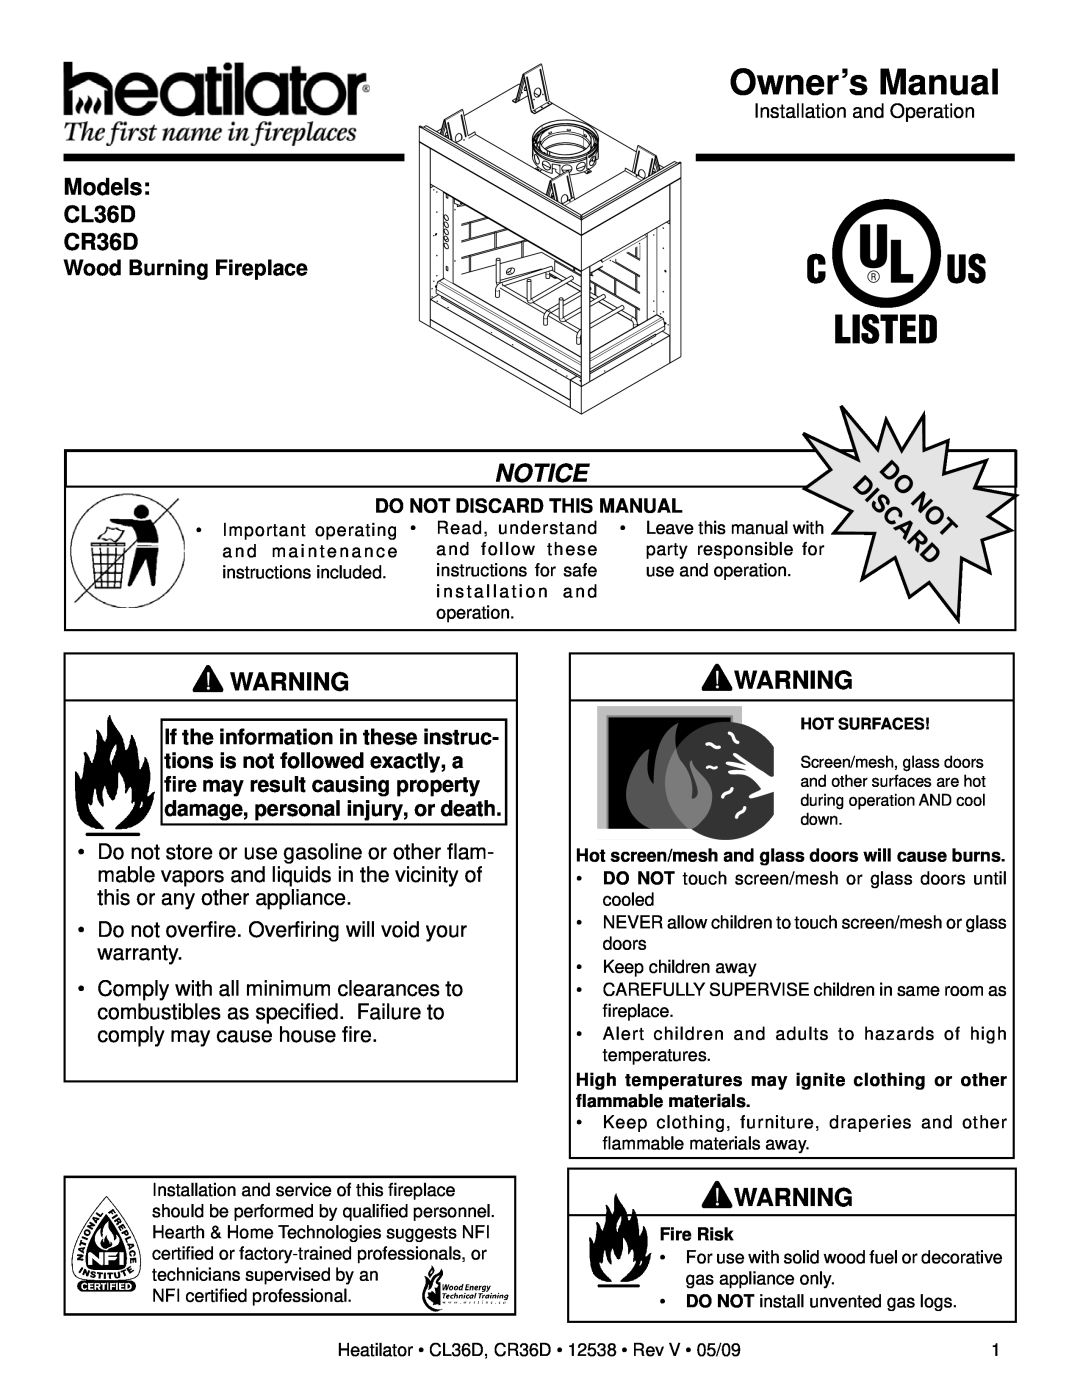 Heatiator owner manual Wood Burning Fireplace, Owner’s Manual, Models CL36D CR36D 